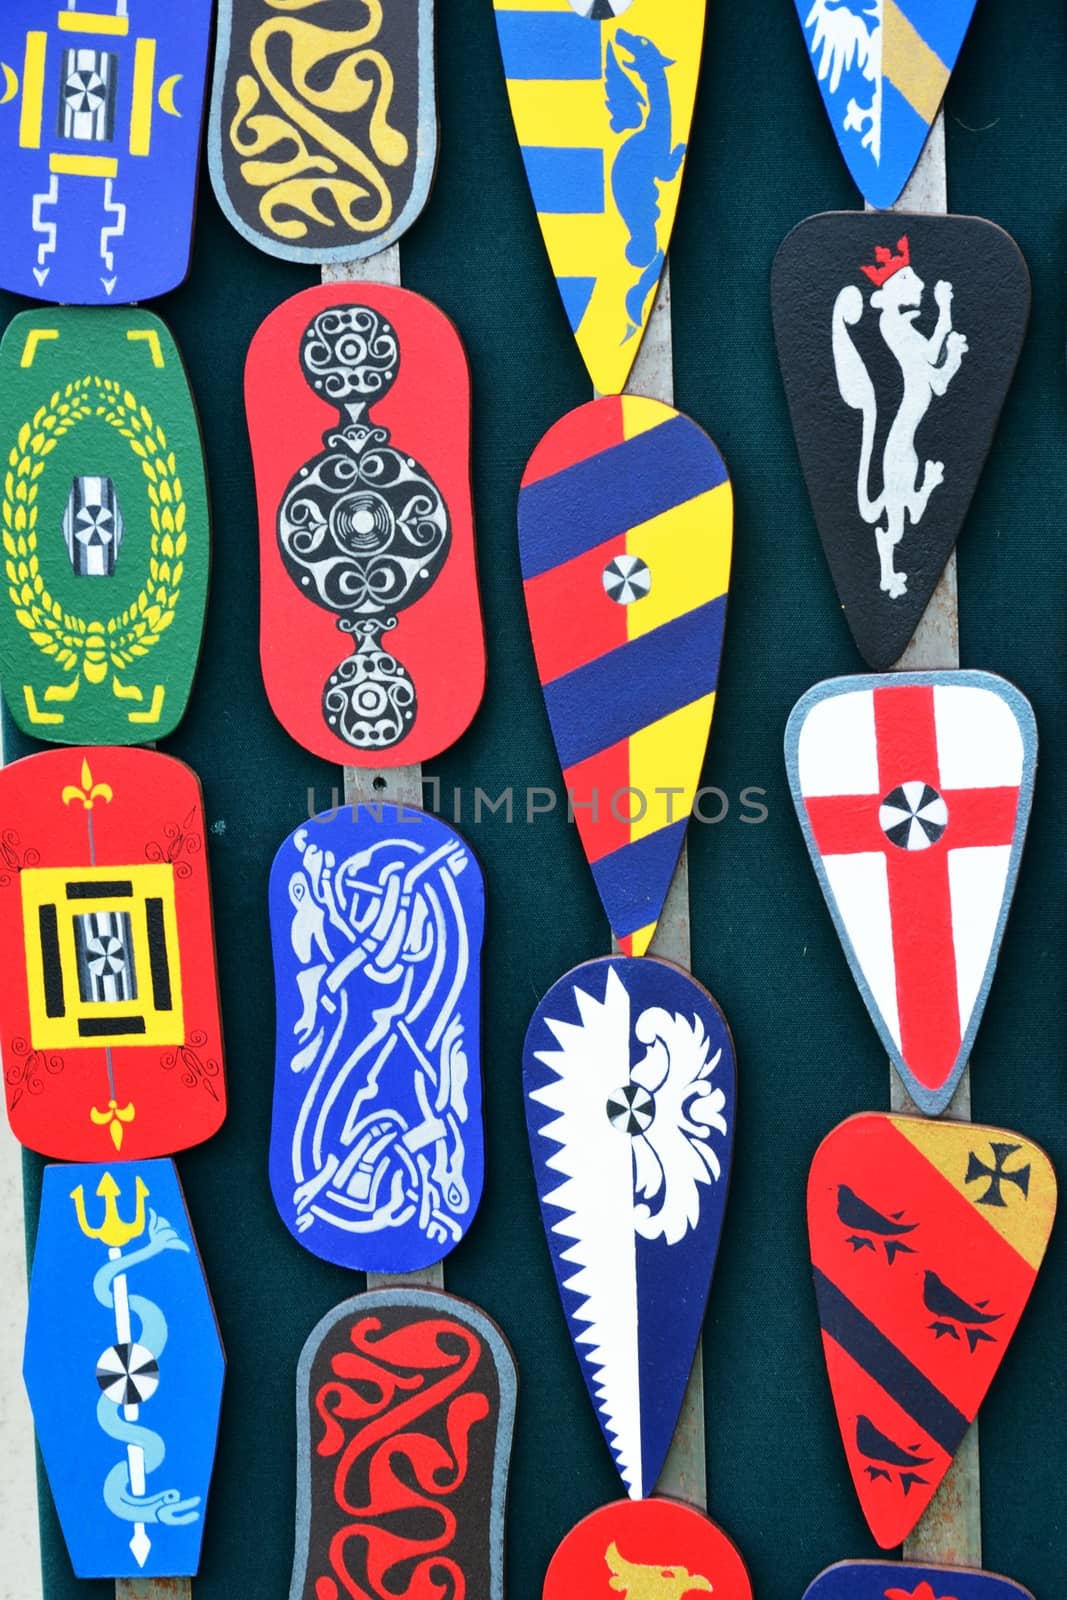 Group of heraldic shield badges